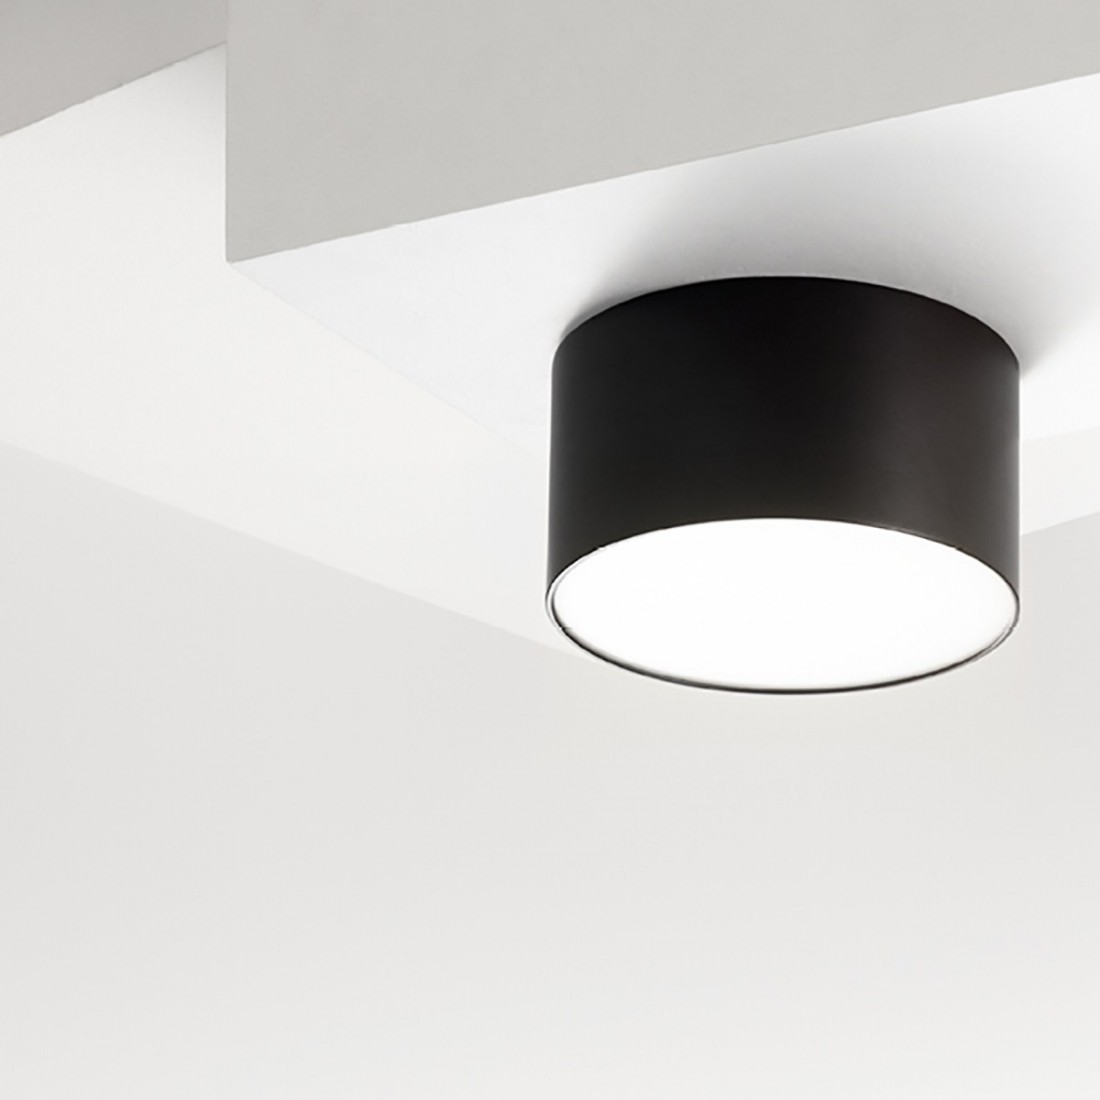 FLOR PG gea Licht Decke Decke Kreis Ring LED Design Modern